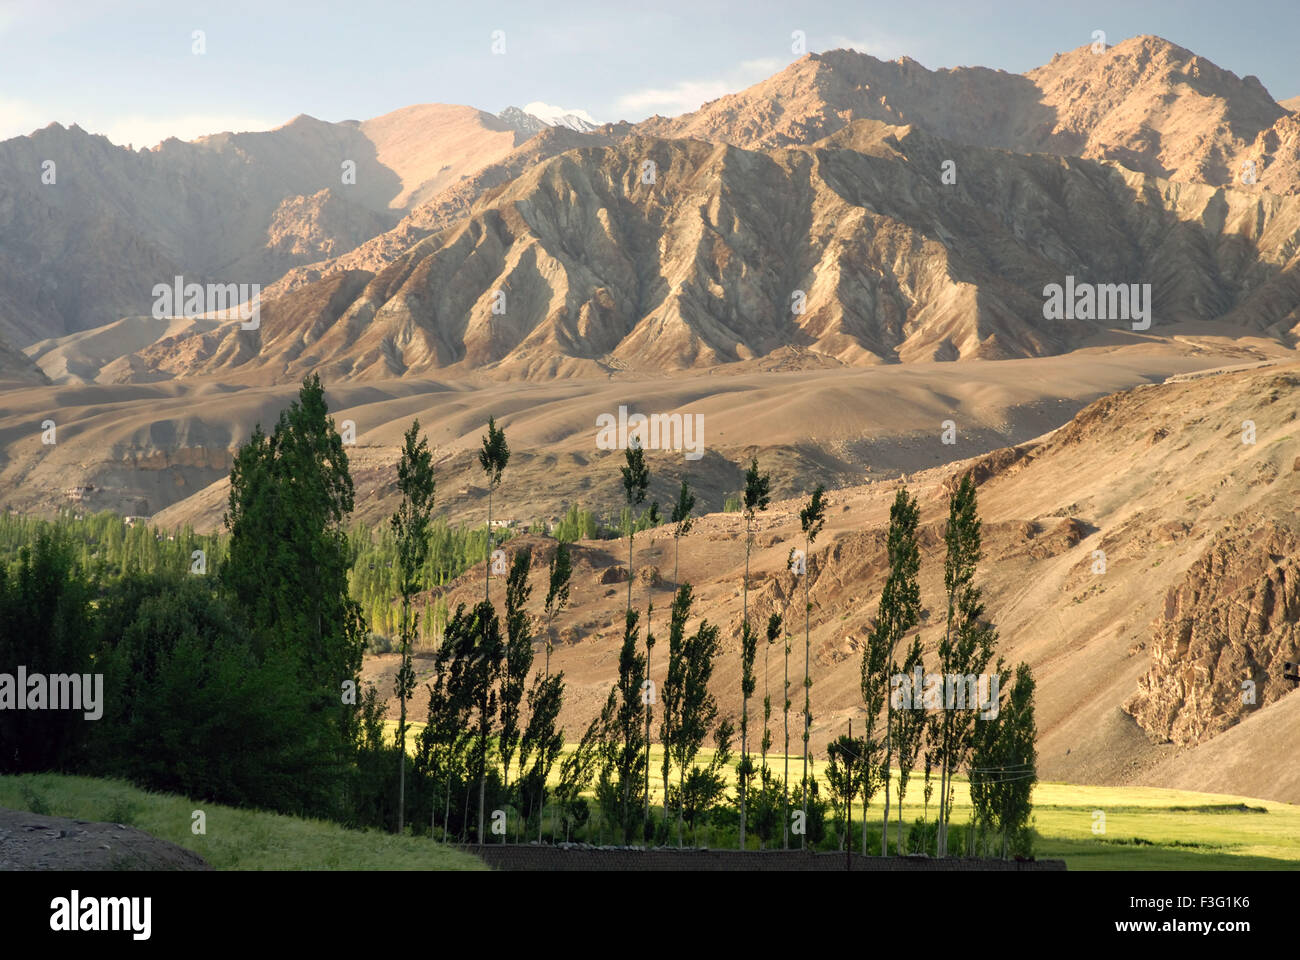 Landscape ; Alchi ; Likir ; Leh ; Ladakh ; Jammu and Kashmir ; Union Territory ; UT ;  India ; Asia Stock Photo